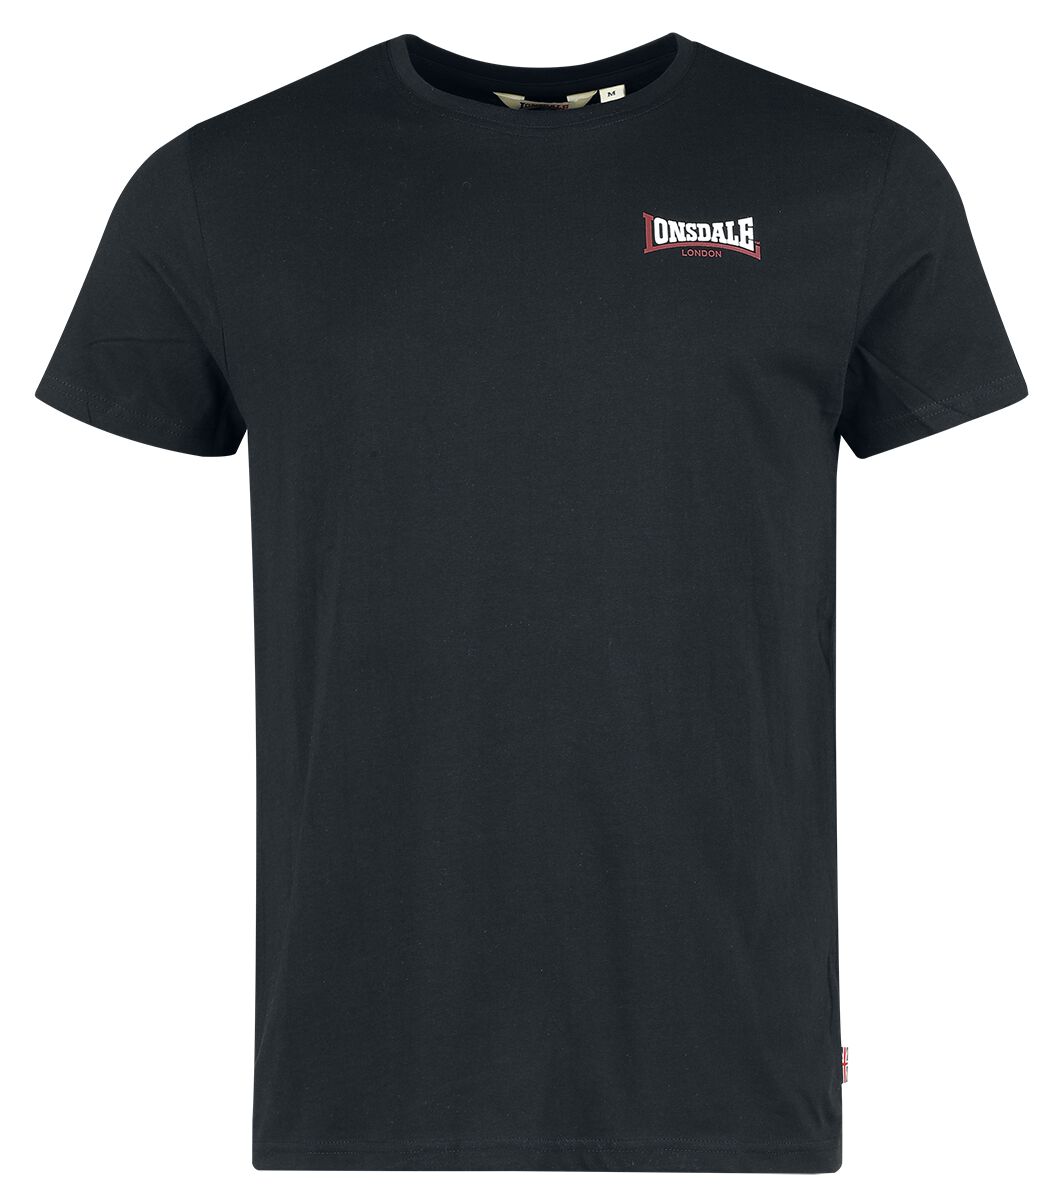 Lonsdale London DALE T-Shirt schwarz in XL von Lonsdale London